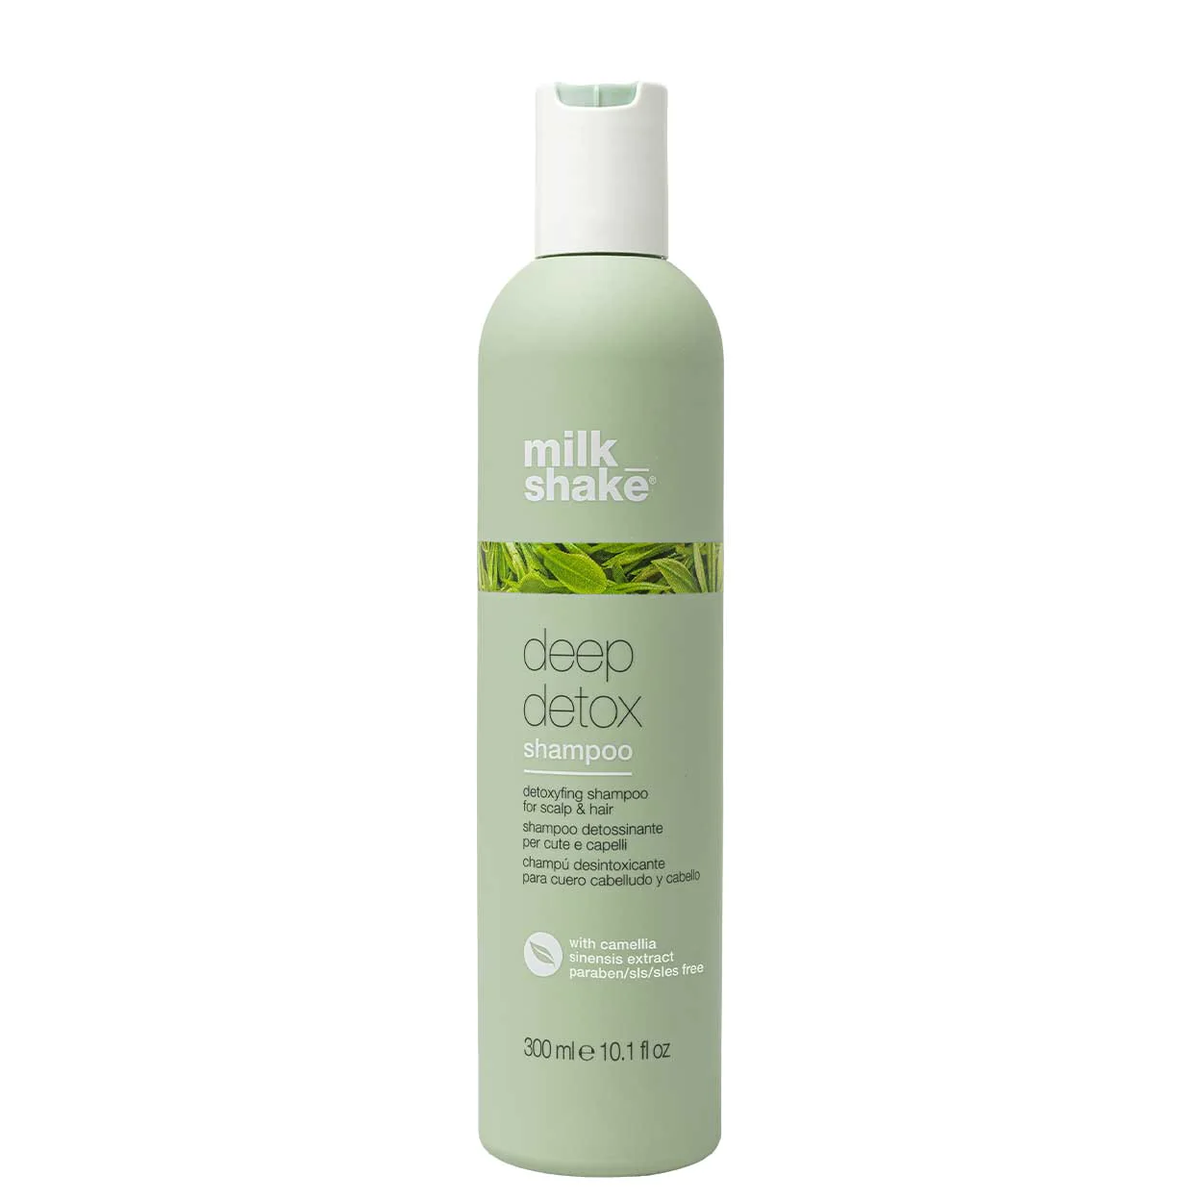 milk_shake deep detox shampoo 300 ml size - detoxifying shampoo for scalp & hair. 